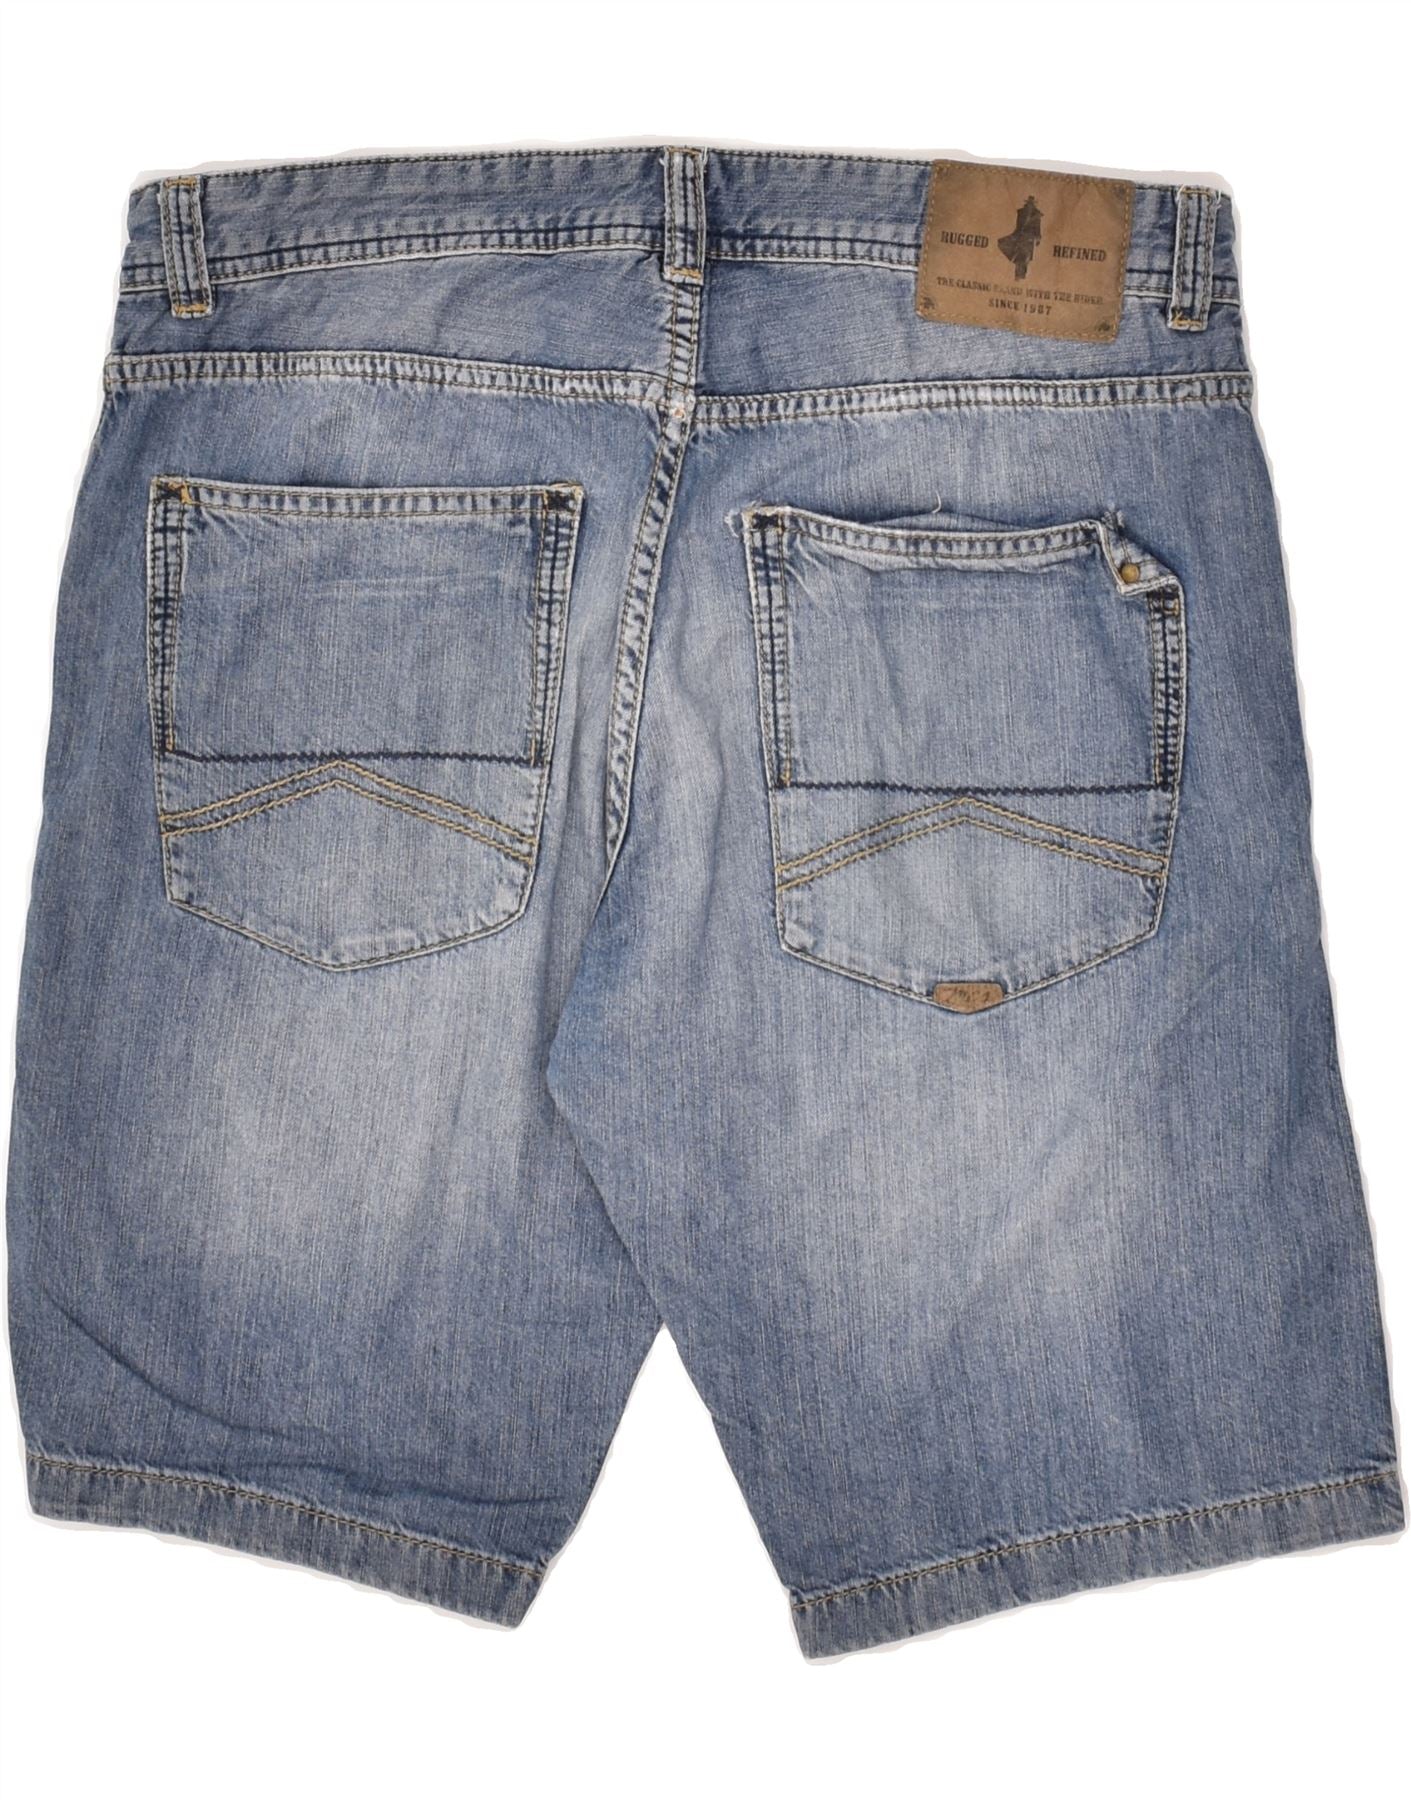 Summer Denim Shorts for Women Mid Rise Distressed Ripped Jean Shorts  Stretchy Folded Hem Skinny Hot Short Jeans - Walmart.com